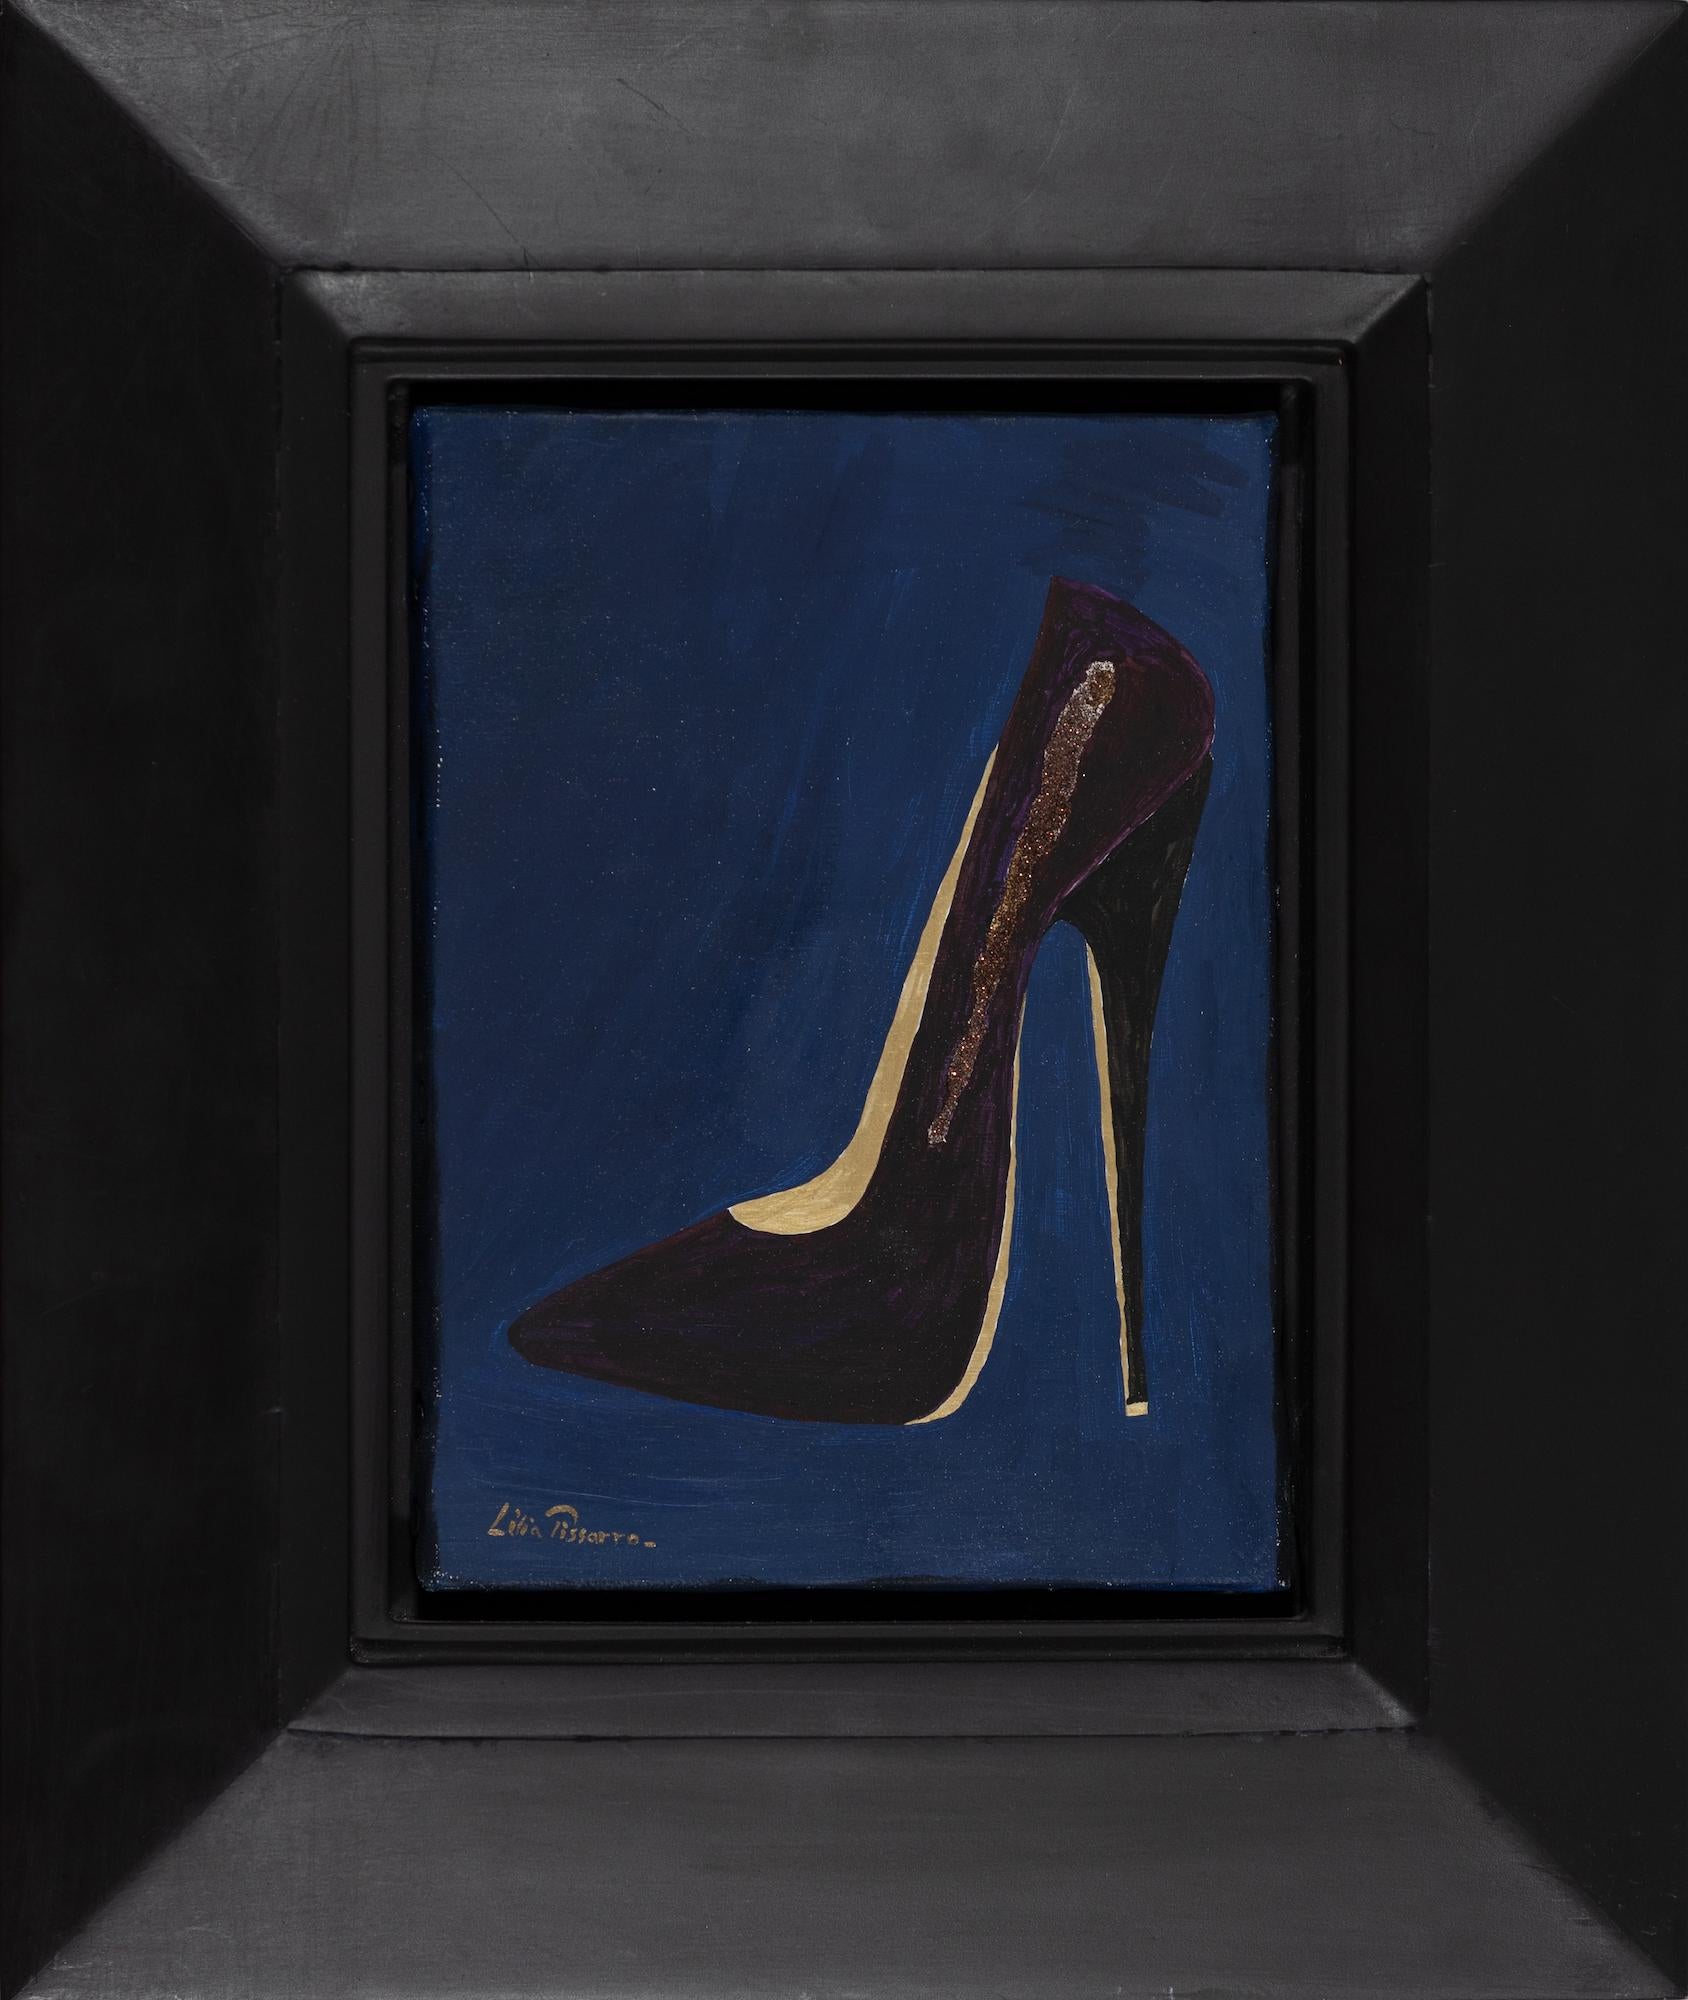 Stiletto 1 by Lélia Pissarro - Contemporary shoe painting - Painting by Lelia Pissarro